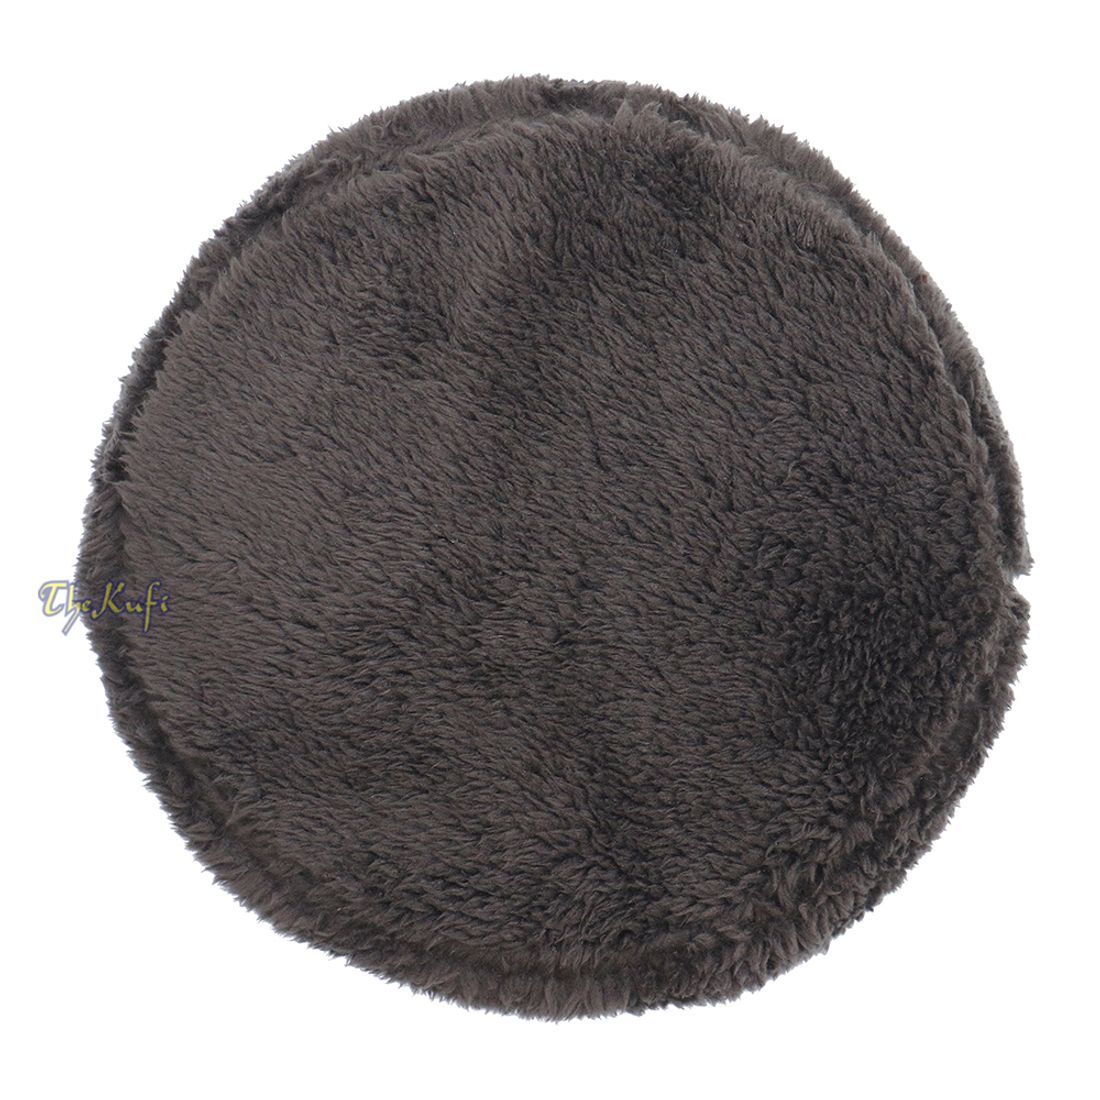 Dark Grey Winter Kufi Faux Fur Warm Chechen Uzbeki Style Islamic Hat Plush One-size Medium-large Stretchy 4-inch Tall Head Cover Muslim